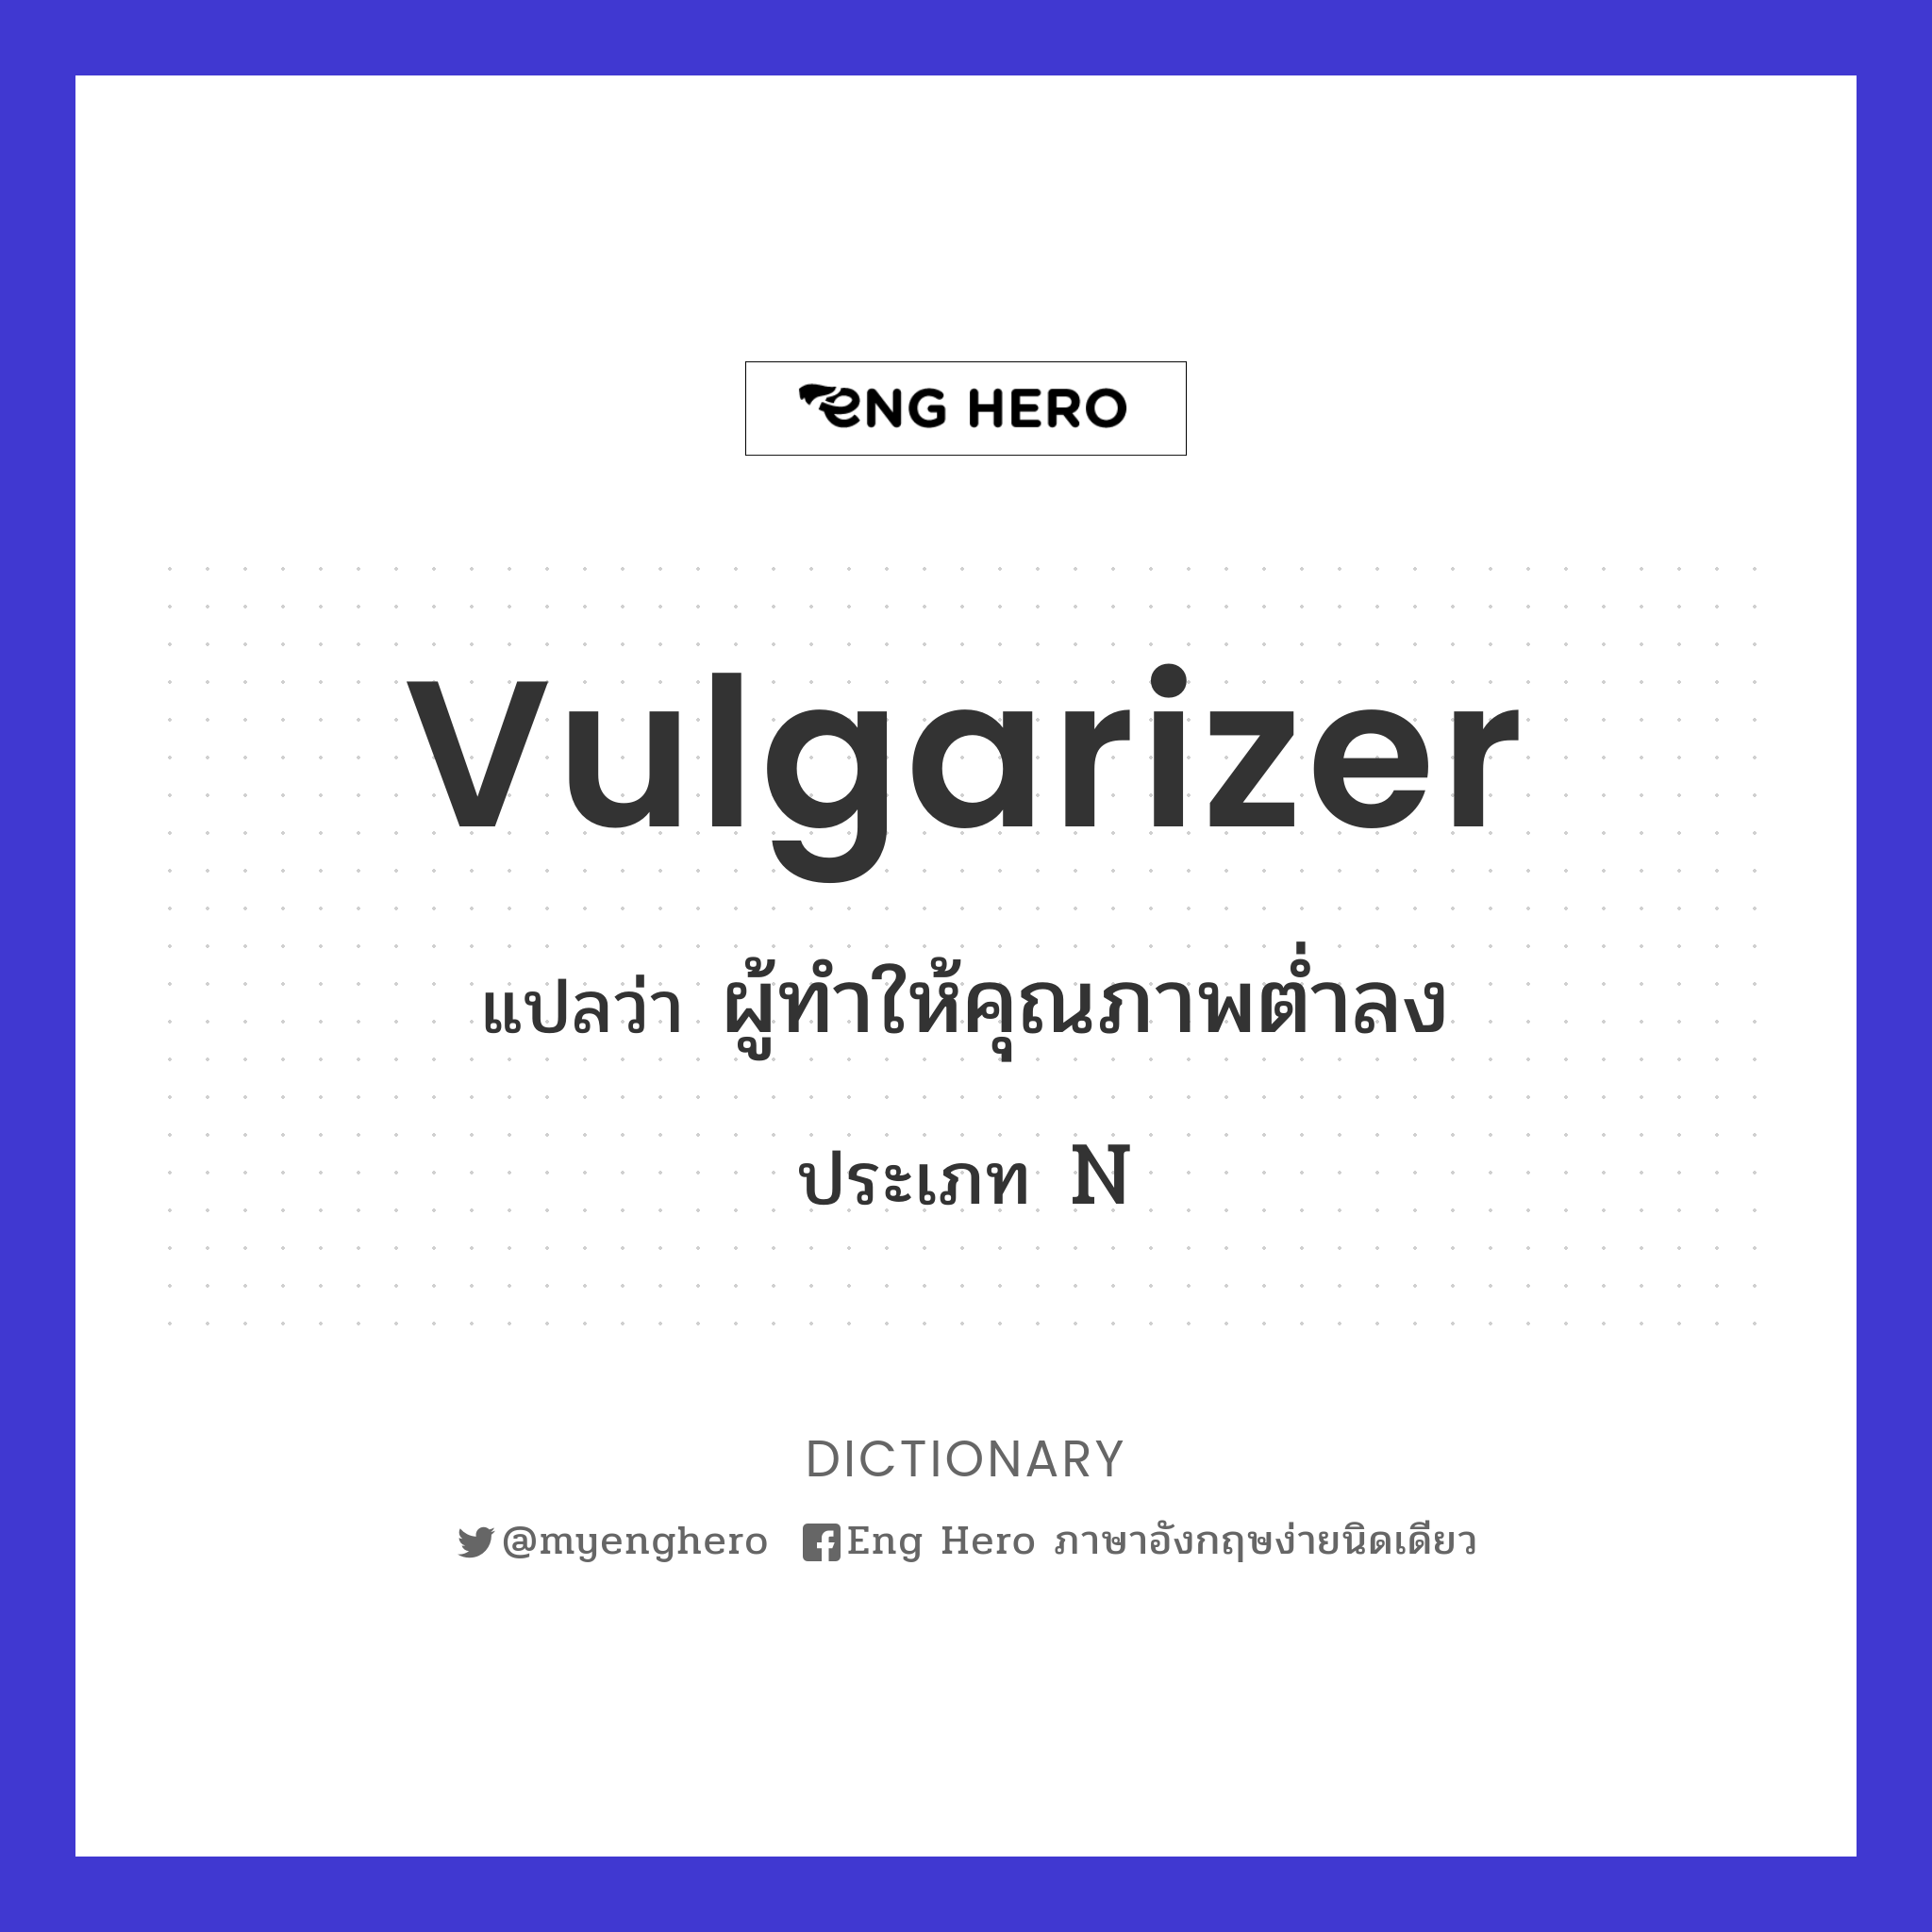 vulgarizer